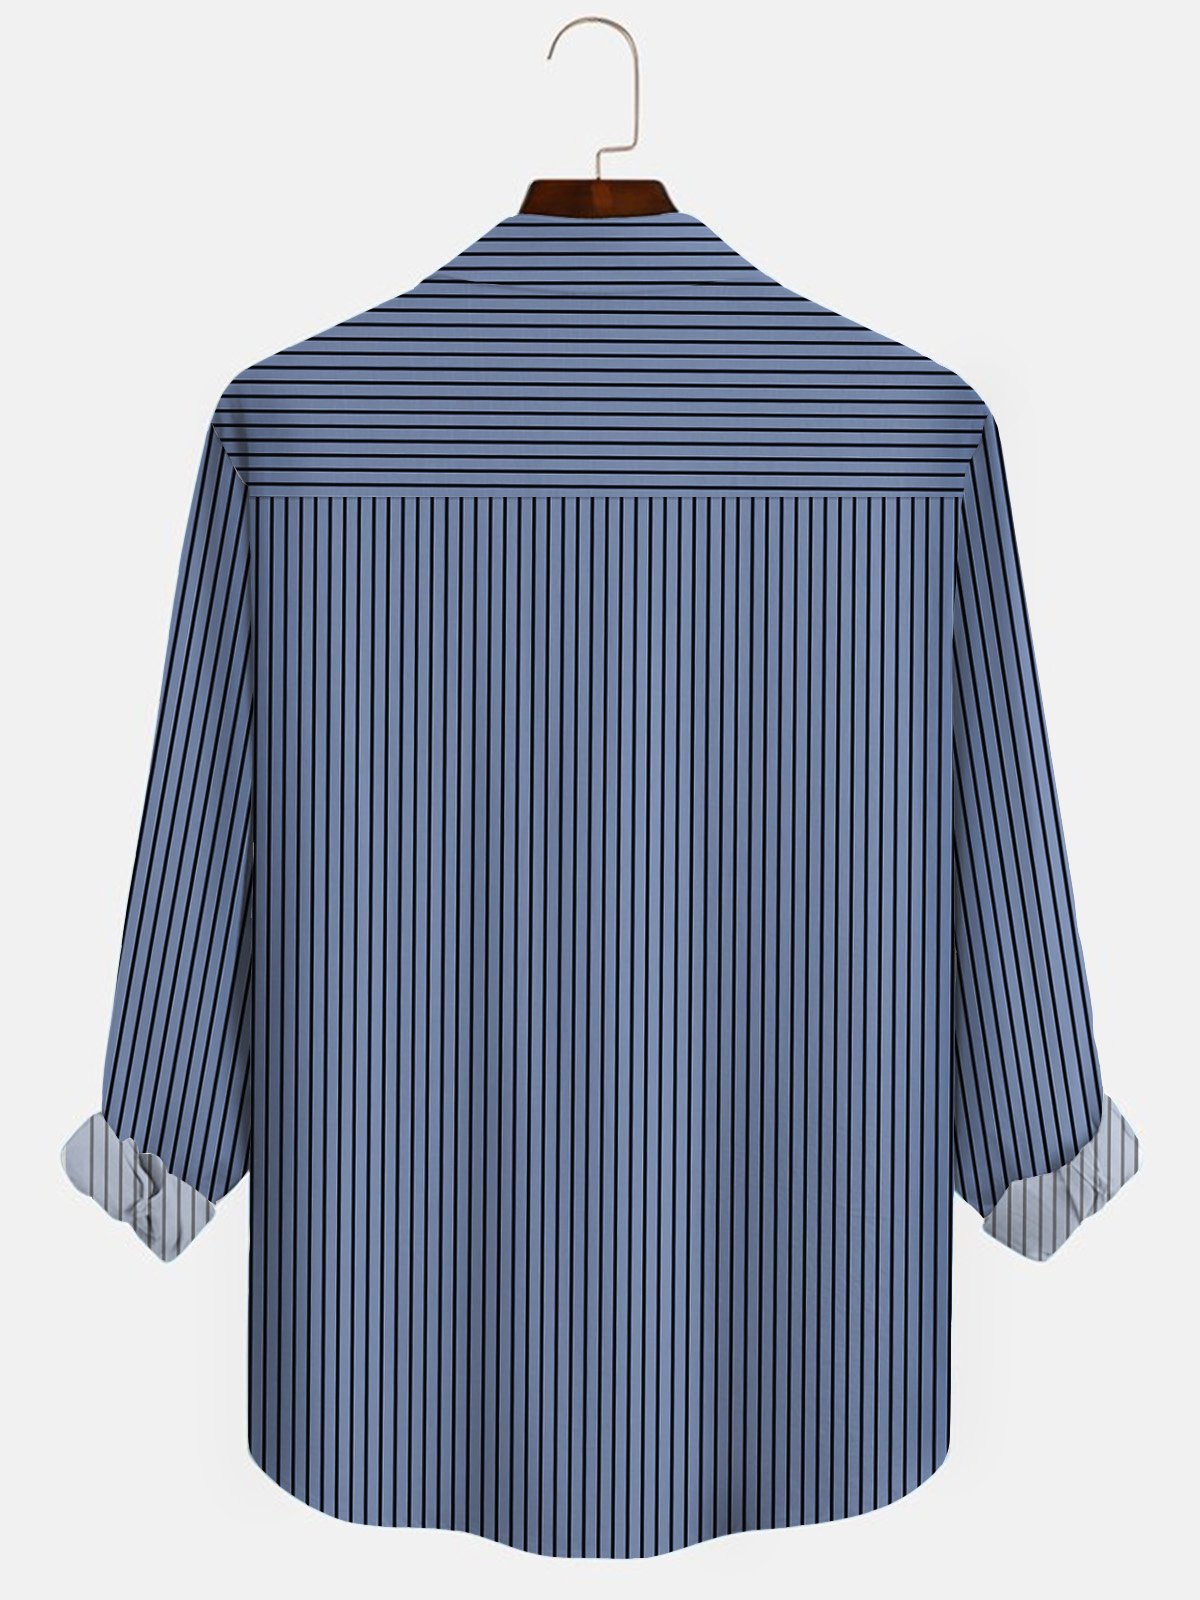 JoyMitty Basic Black and White Striped Men's Casual Long Sleeve Shirts Stretch Plus Size Aloha Camp Pocket Shirts